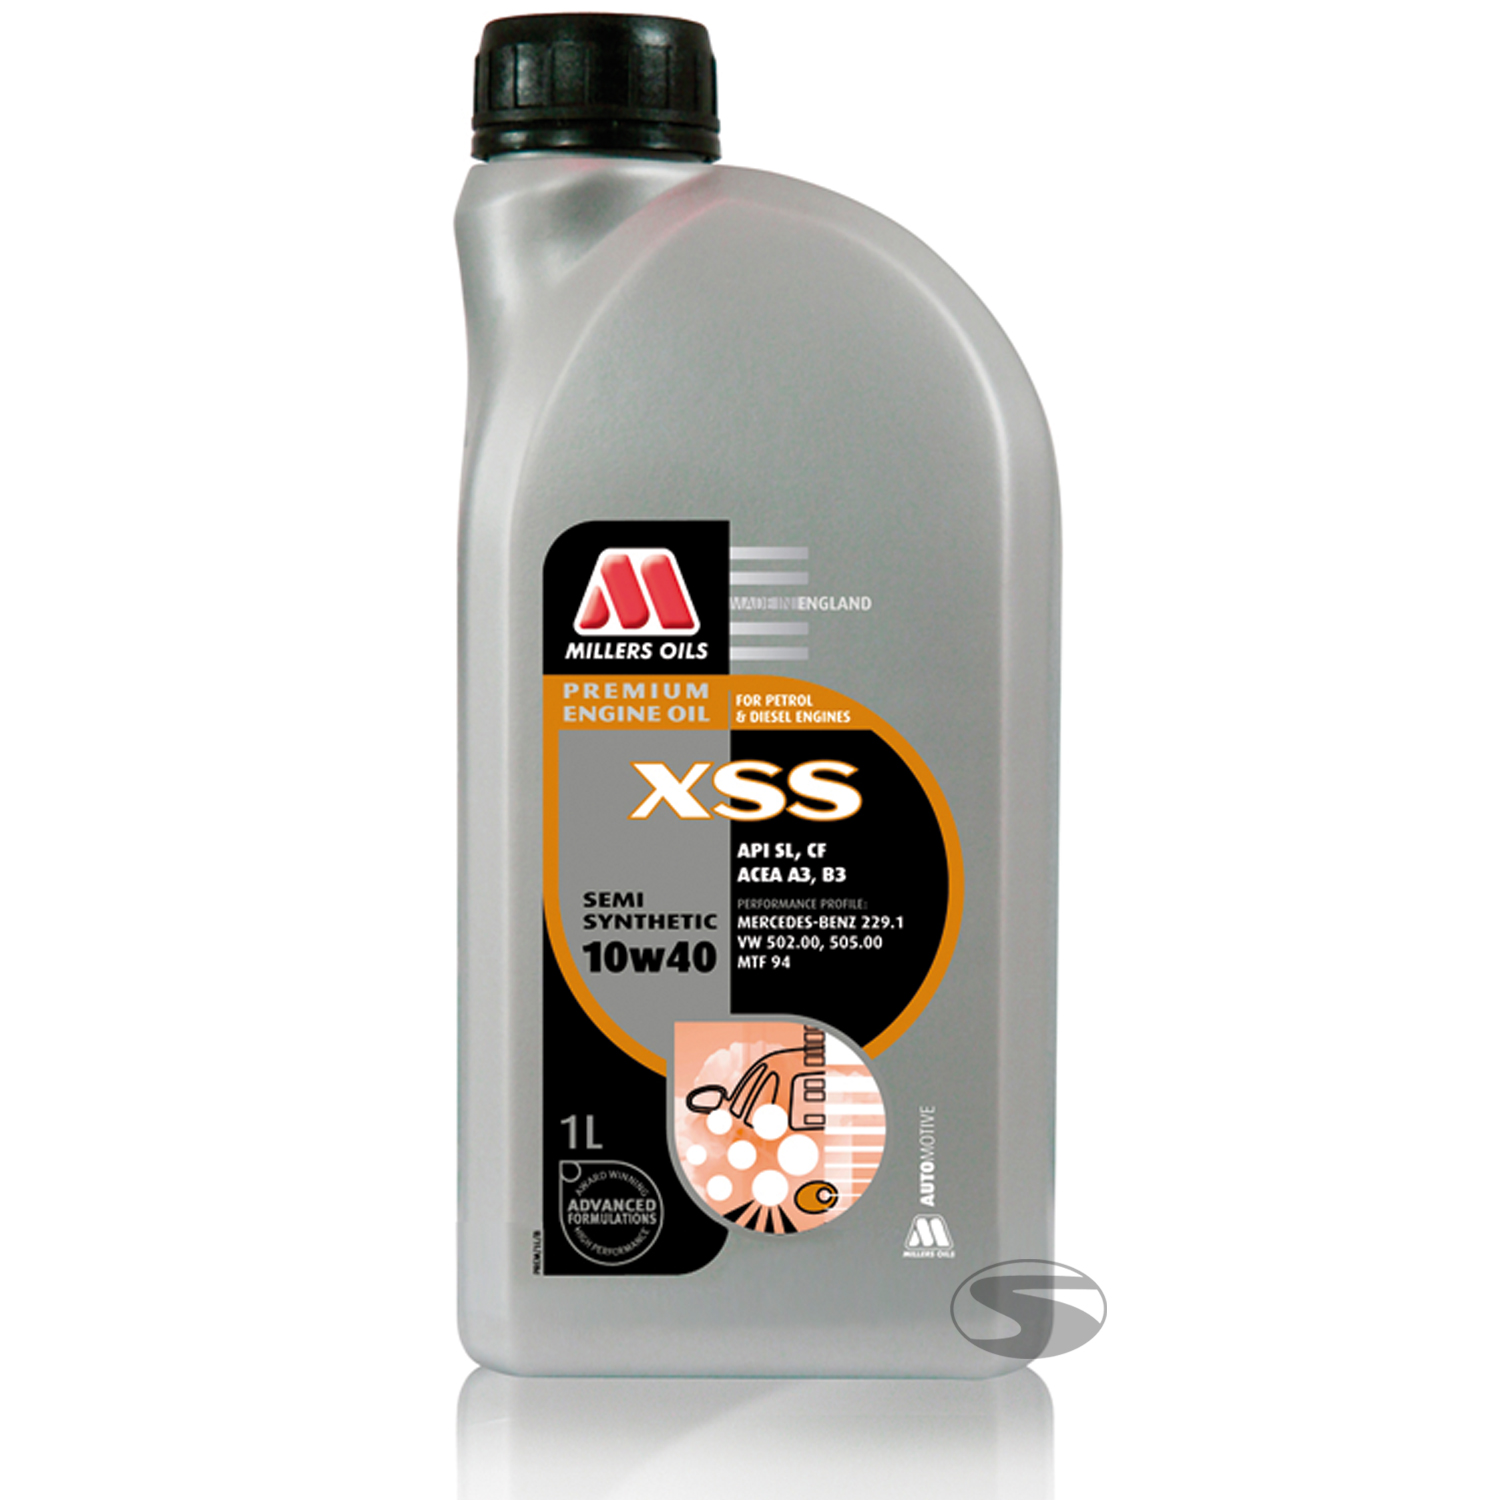 Millers Oils XSS 10W-40 Semi Synthetic, 1 Liter